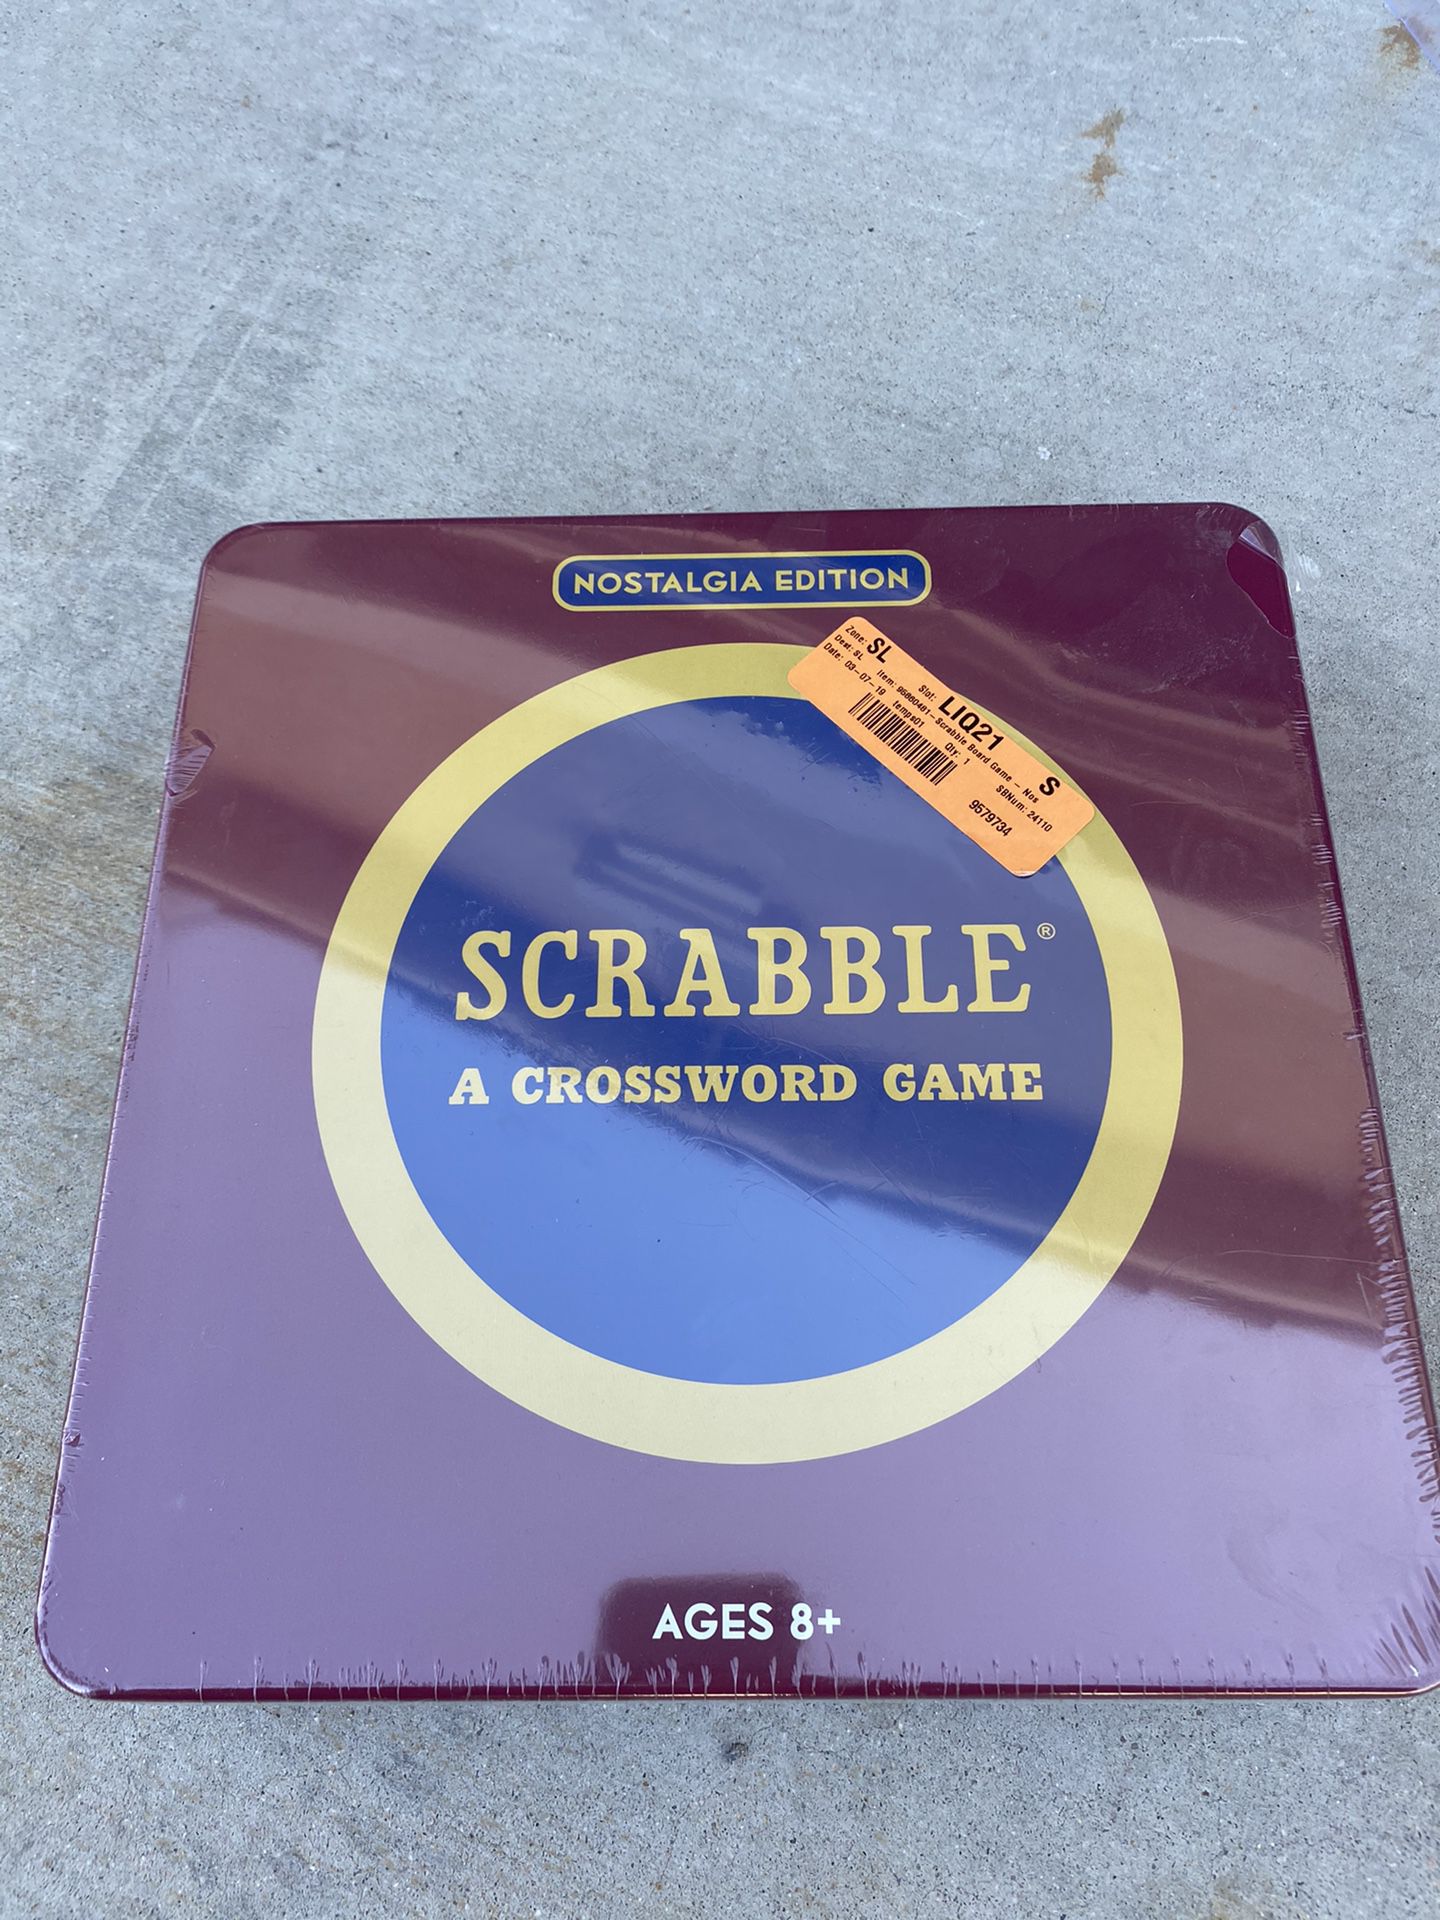 Scrabble Nostalgia Edition. Keyword:games board game family outdoor fun crossword puzzle friends